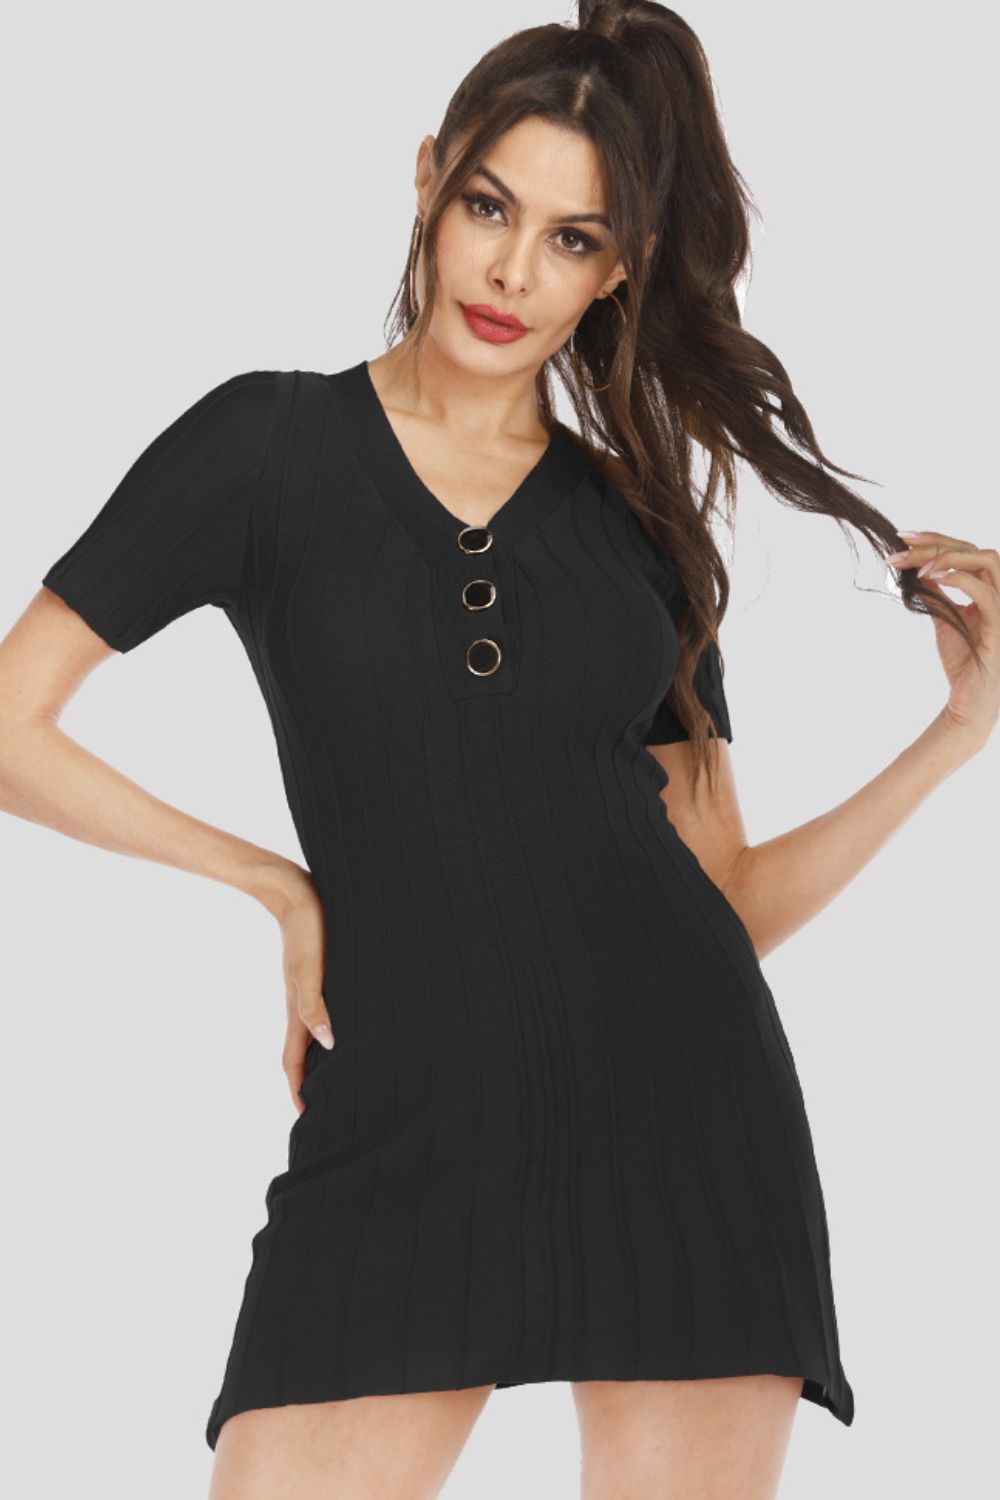 BLACK ONE SIZE Buttoned Short Sleeve V-Neck Knit Dress - 2 colors - women's dress at TFC&H Co.